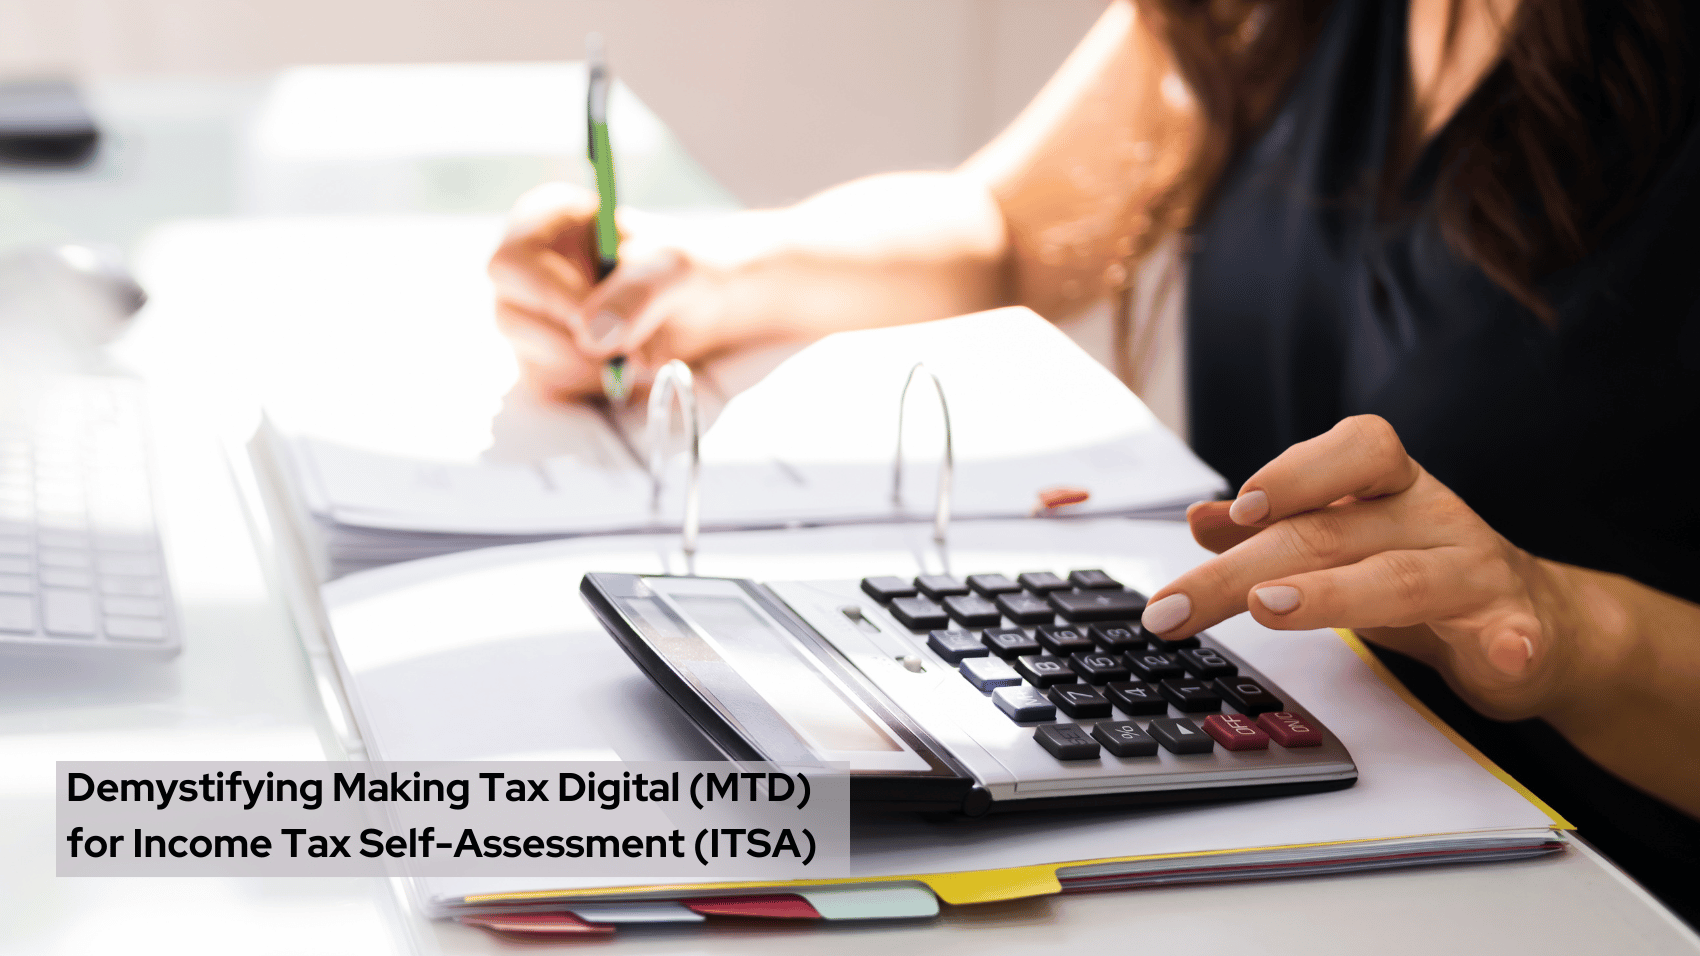 Demystifying Making Tax Digital (MTD) for Income Tax Self-Assessment (ITSA)